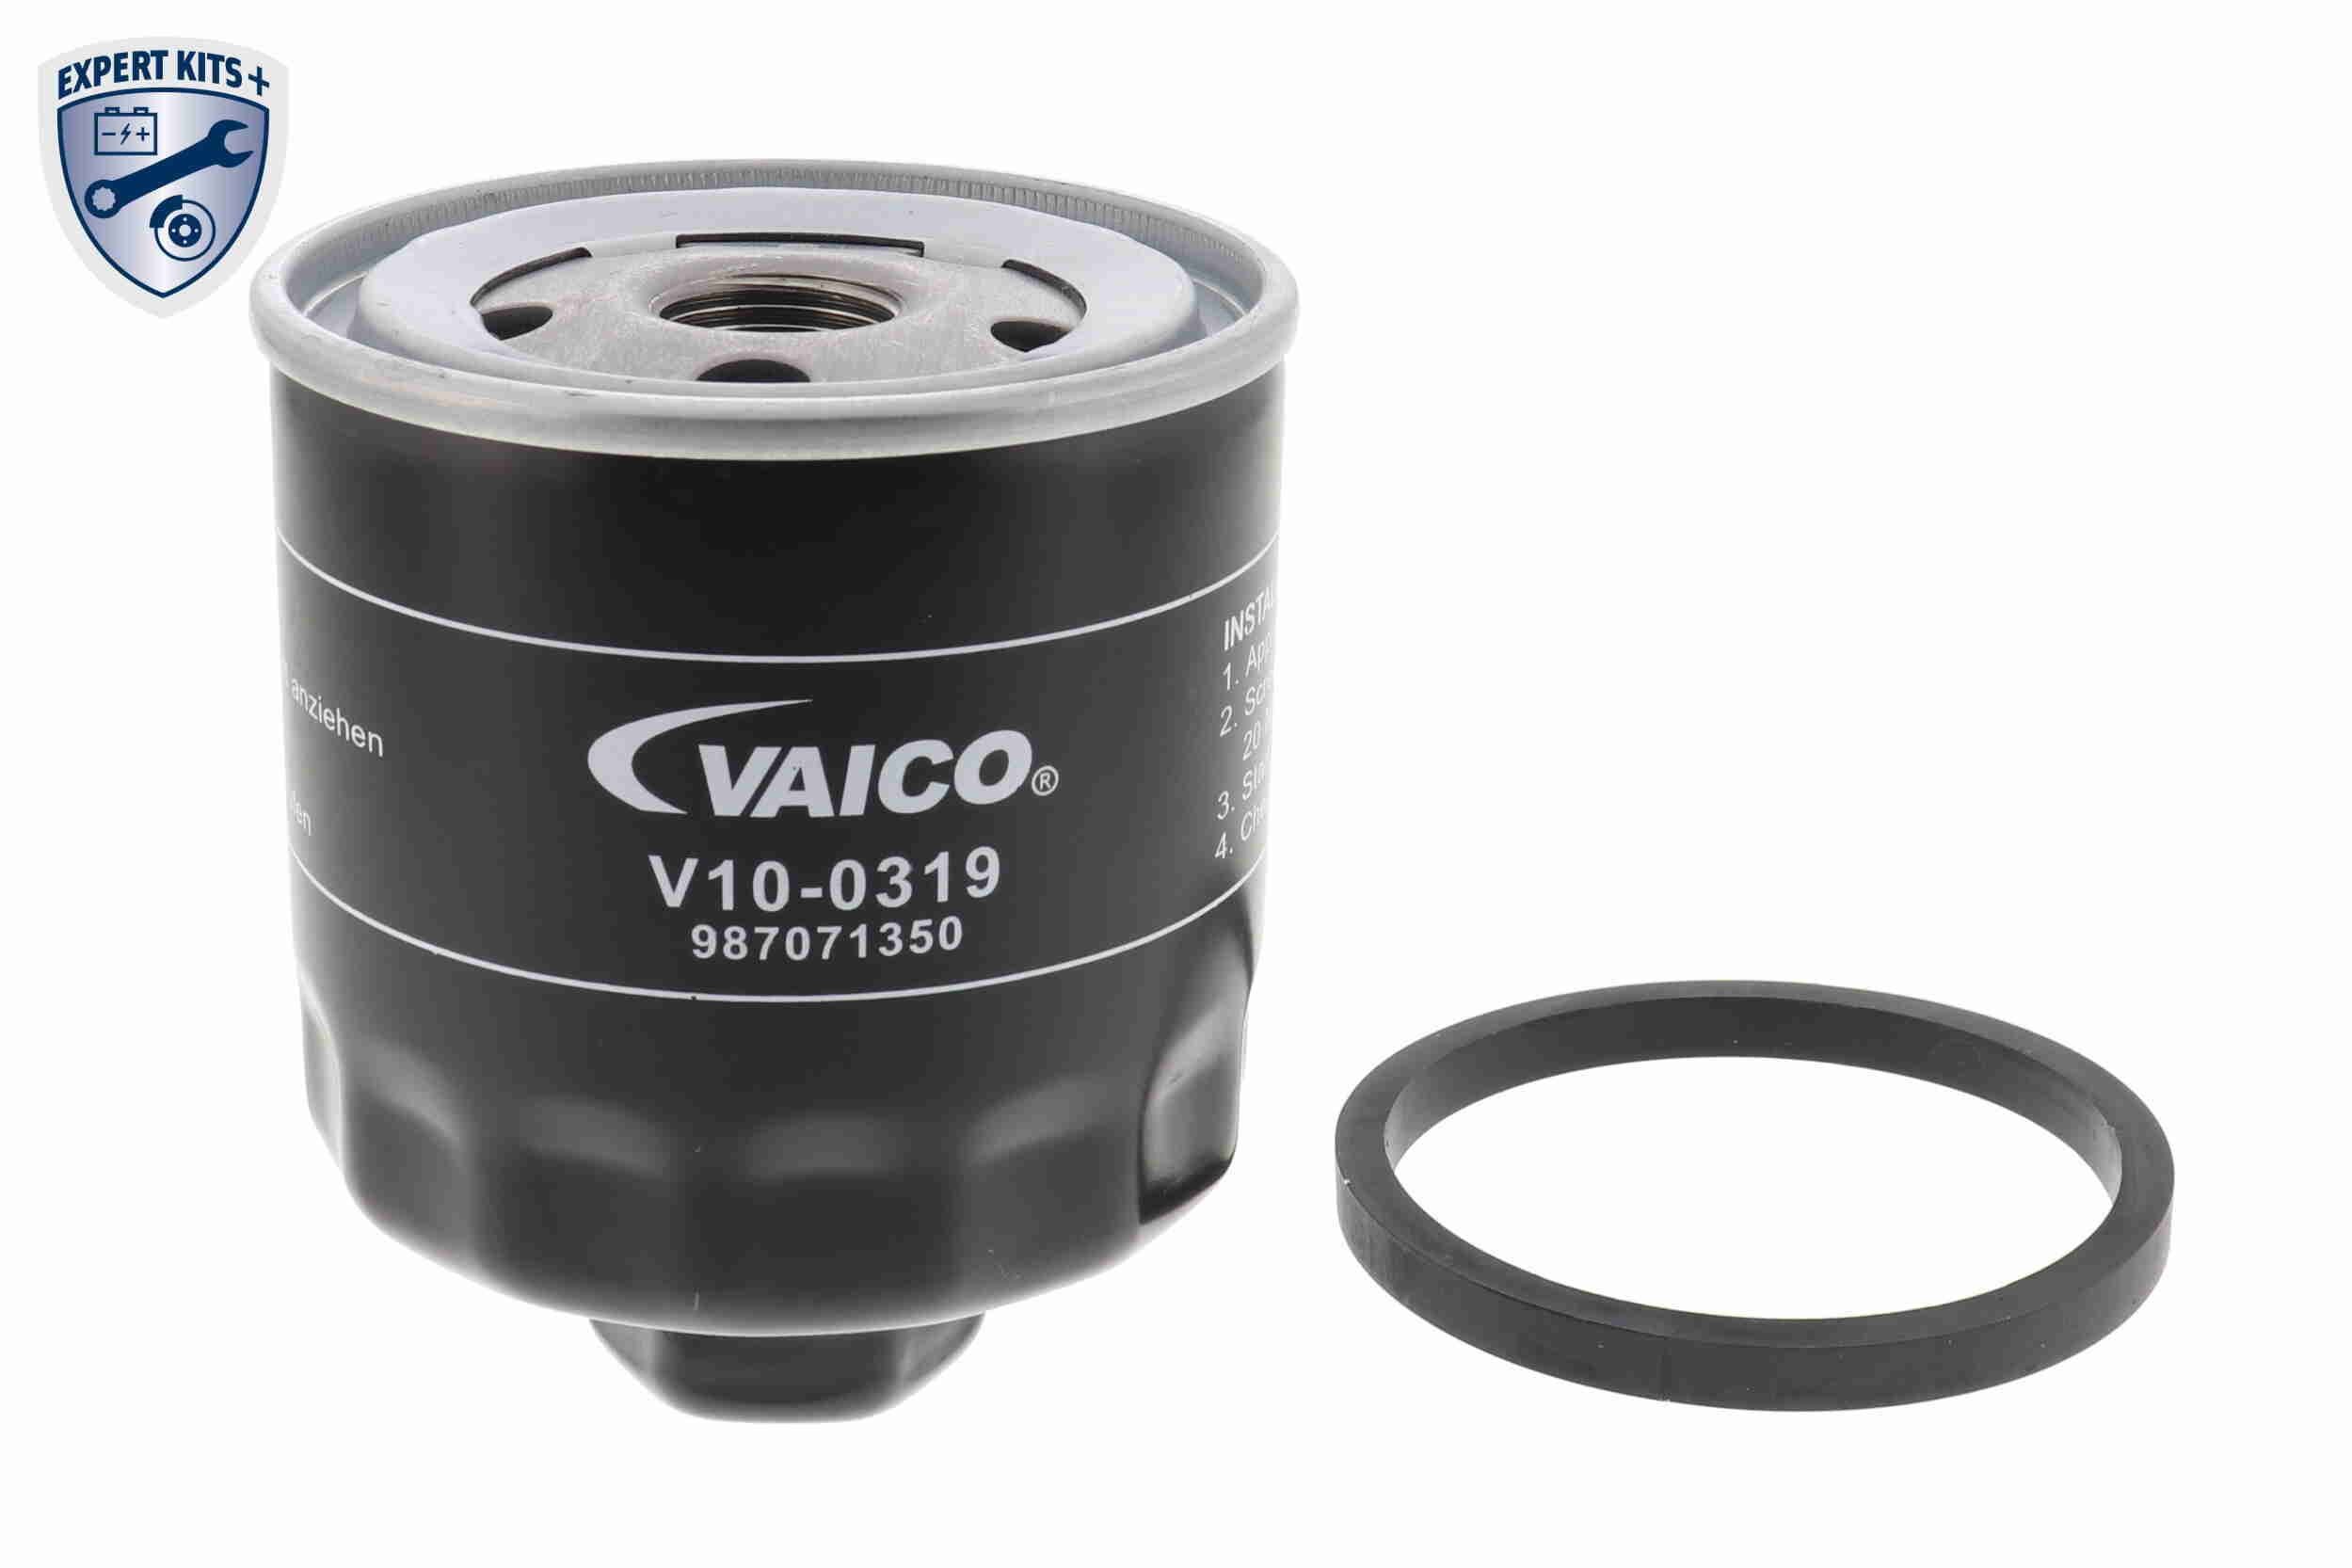 VAICO V10-0319 Engine oil filter 3/4-16 UNF, Original VAICO Quality, with one anti-return valve, Spin-on Filter